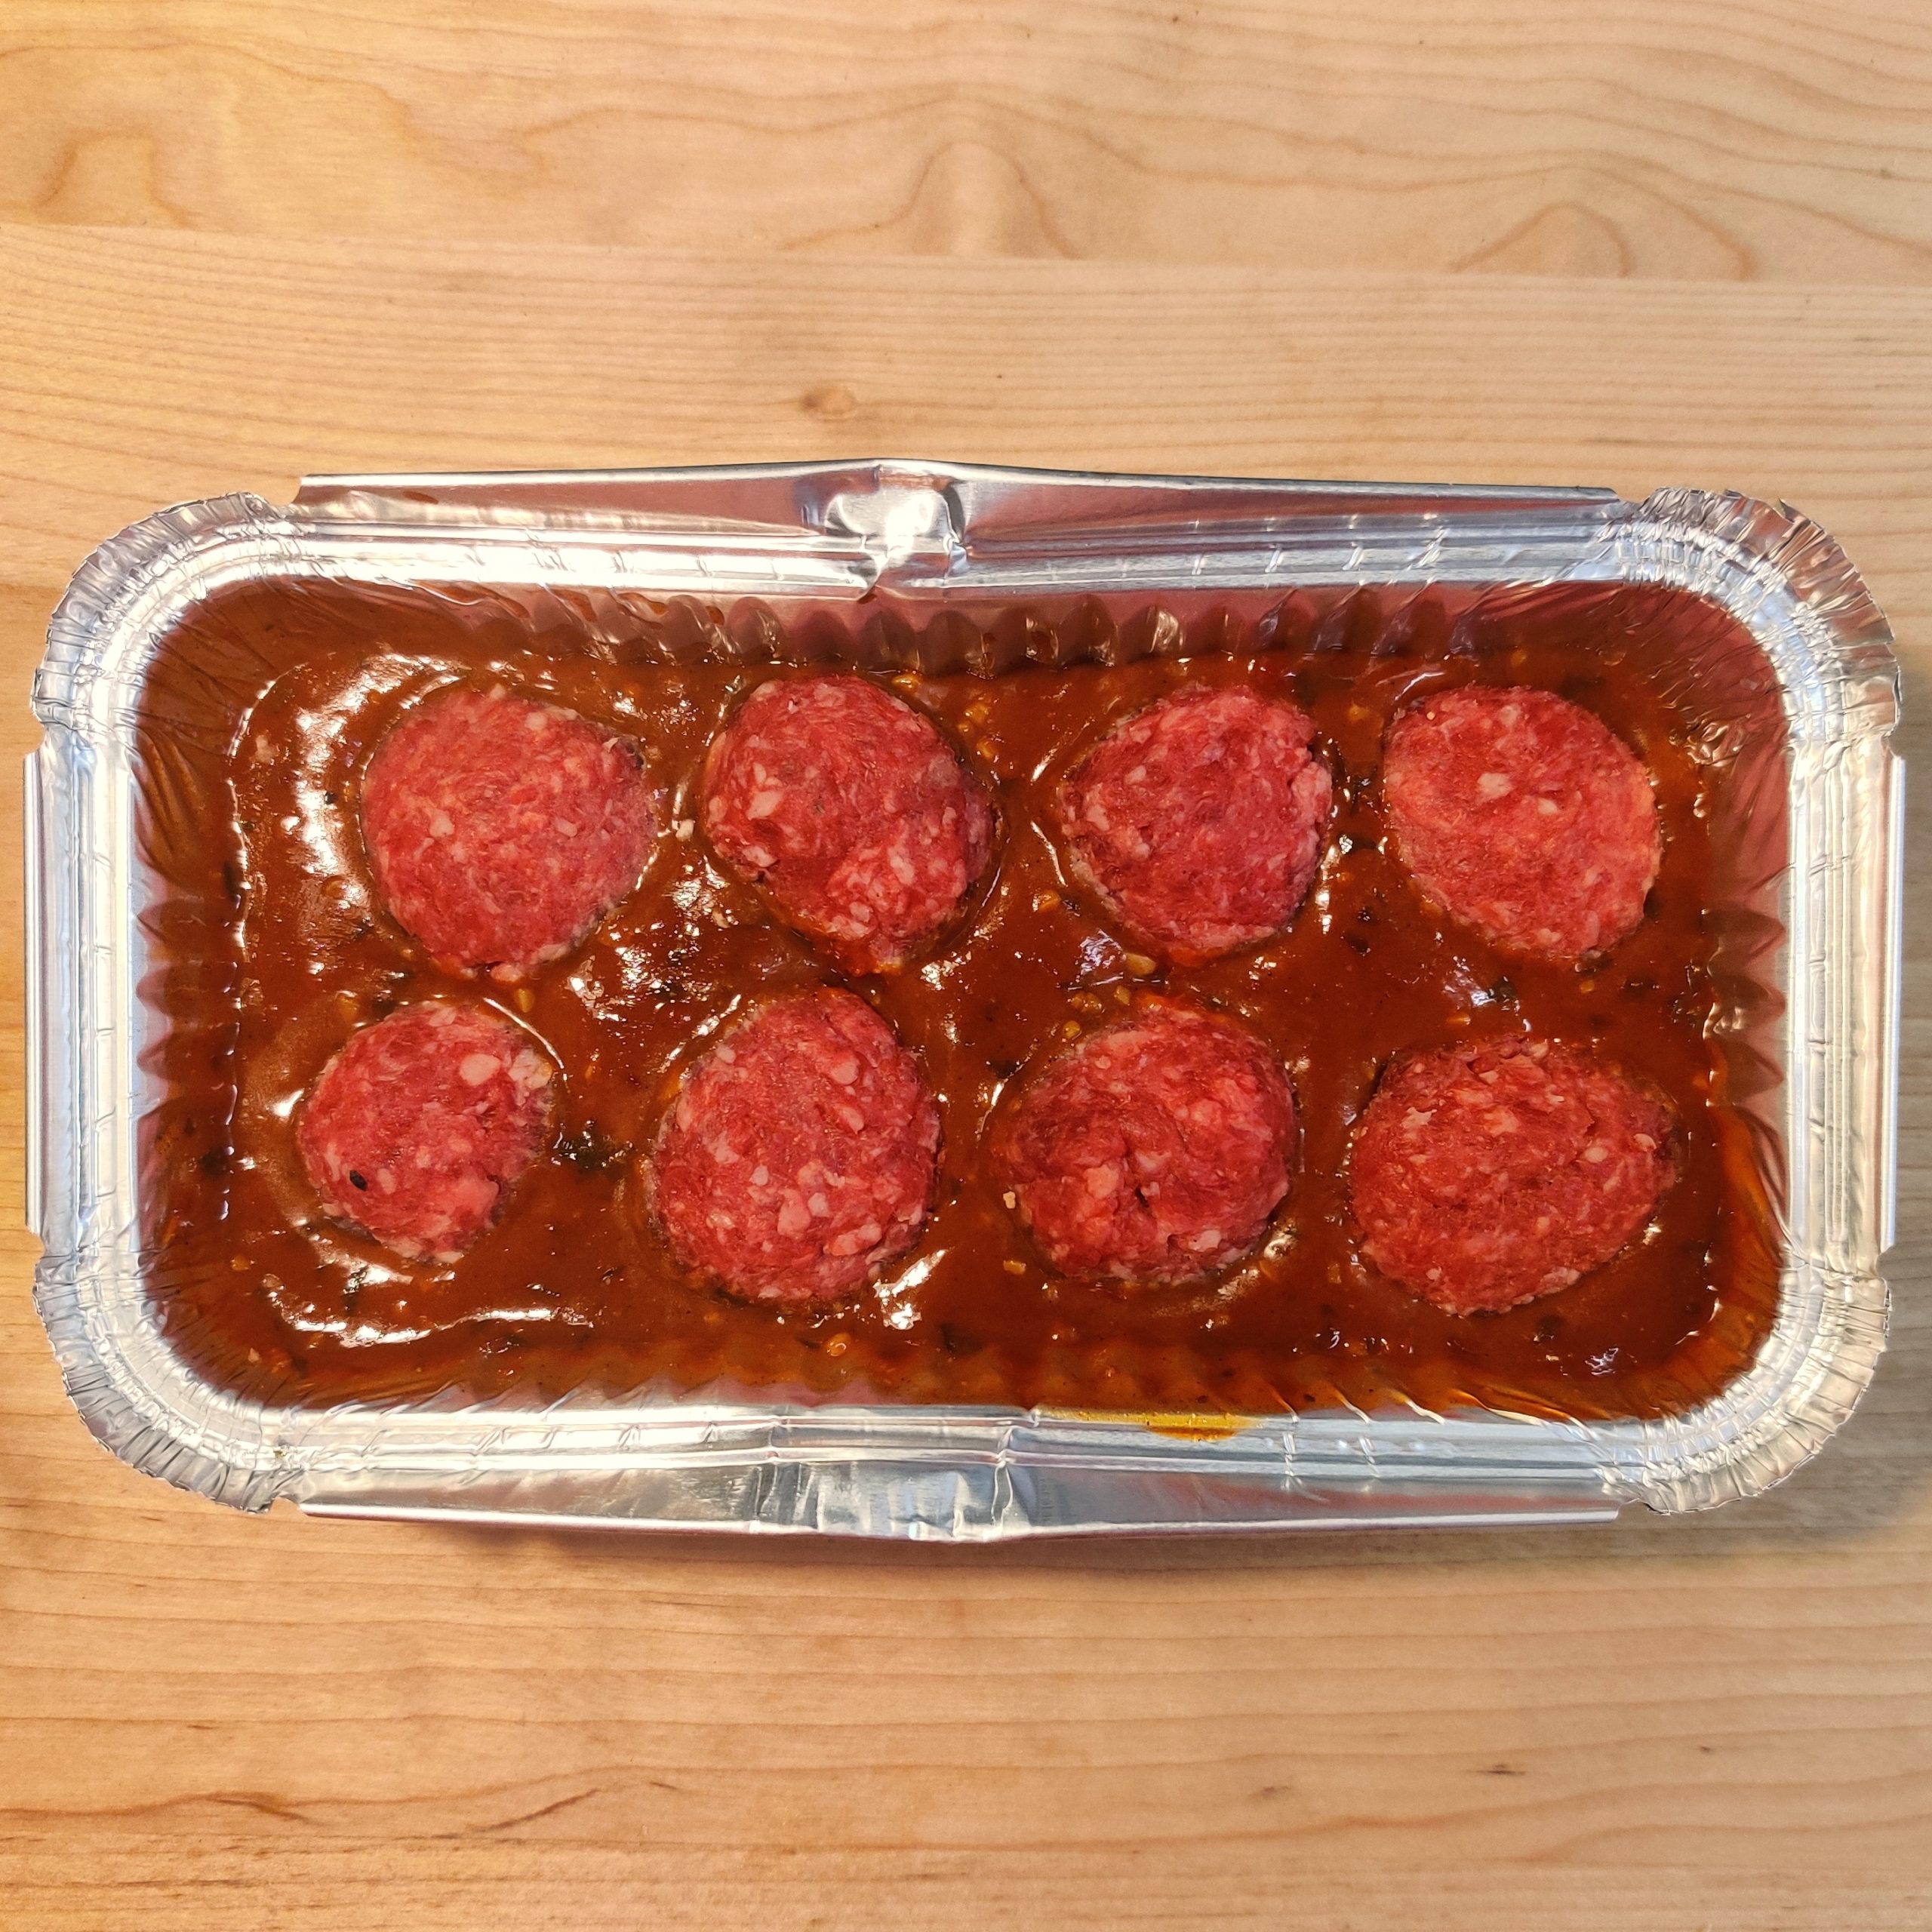 Tray of 8 meatballs